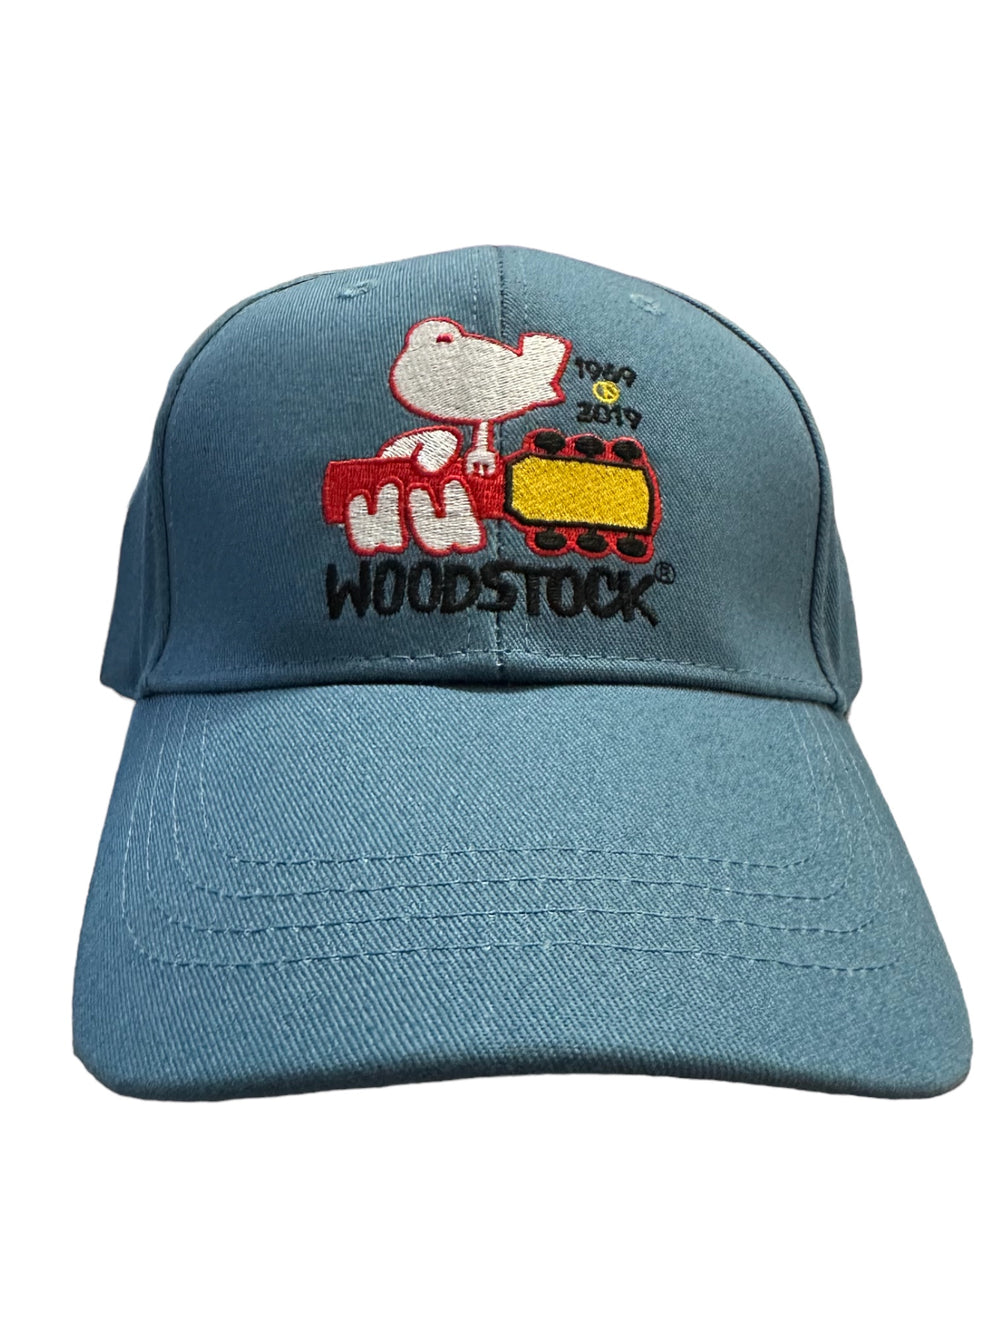 Woodstock Logo Denim Official Embroidered Peak Cap Adjustable Brand New